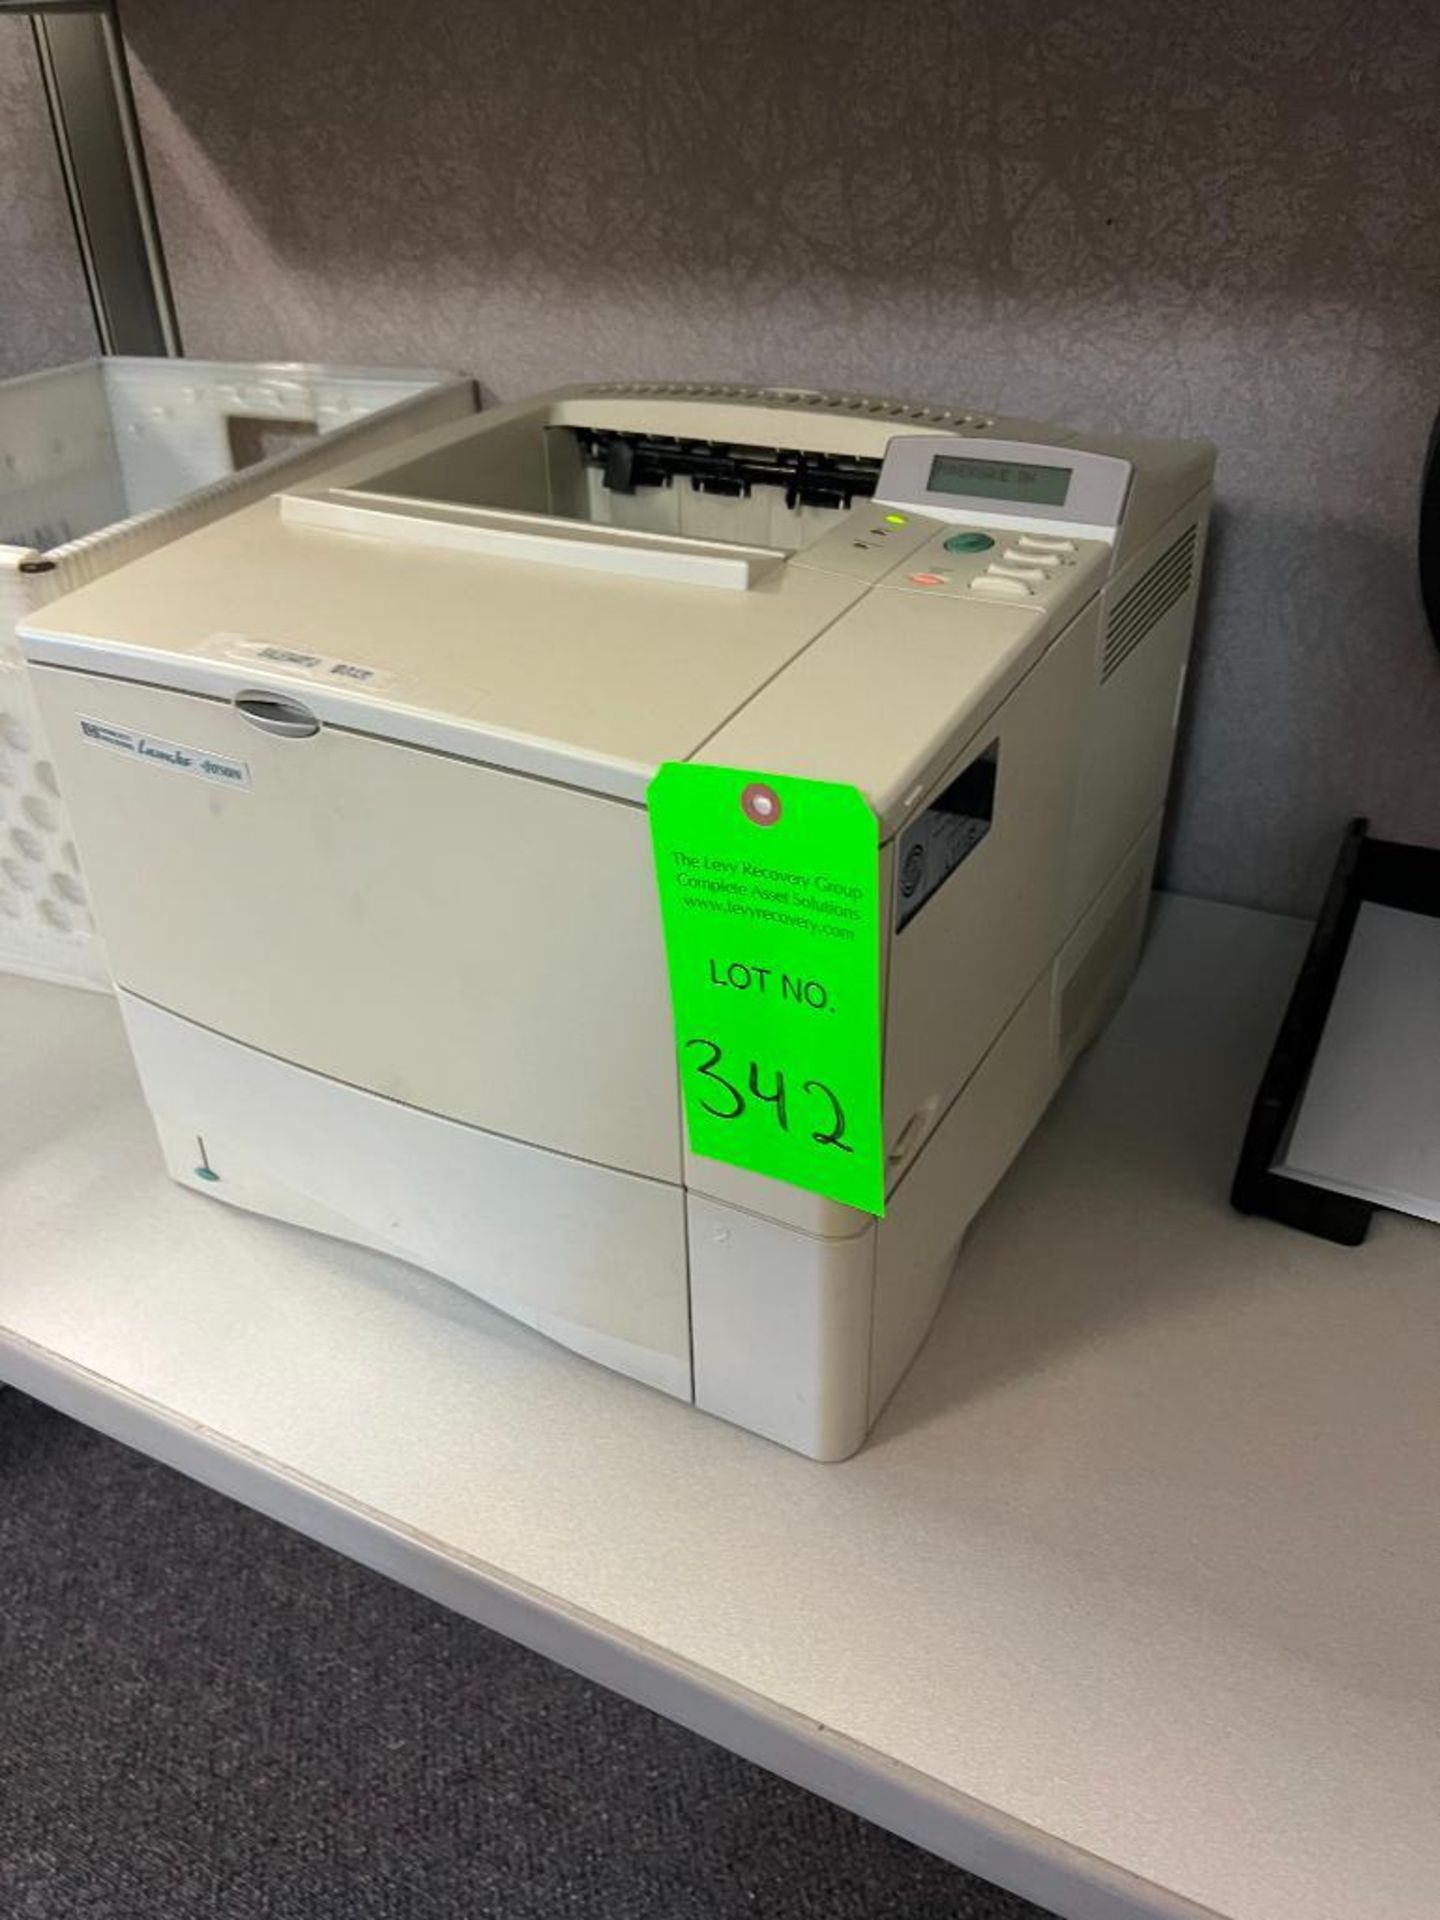 Hewlett-Packard Model LaserJet 4050n Printer - Image 2 of 3